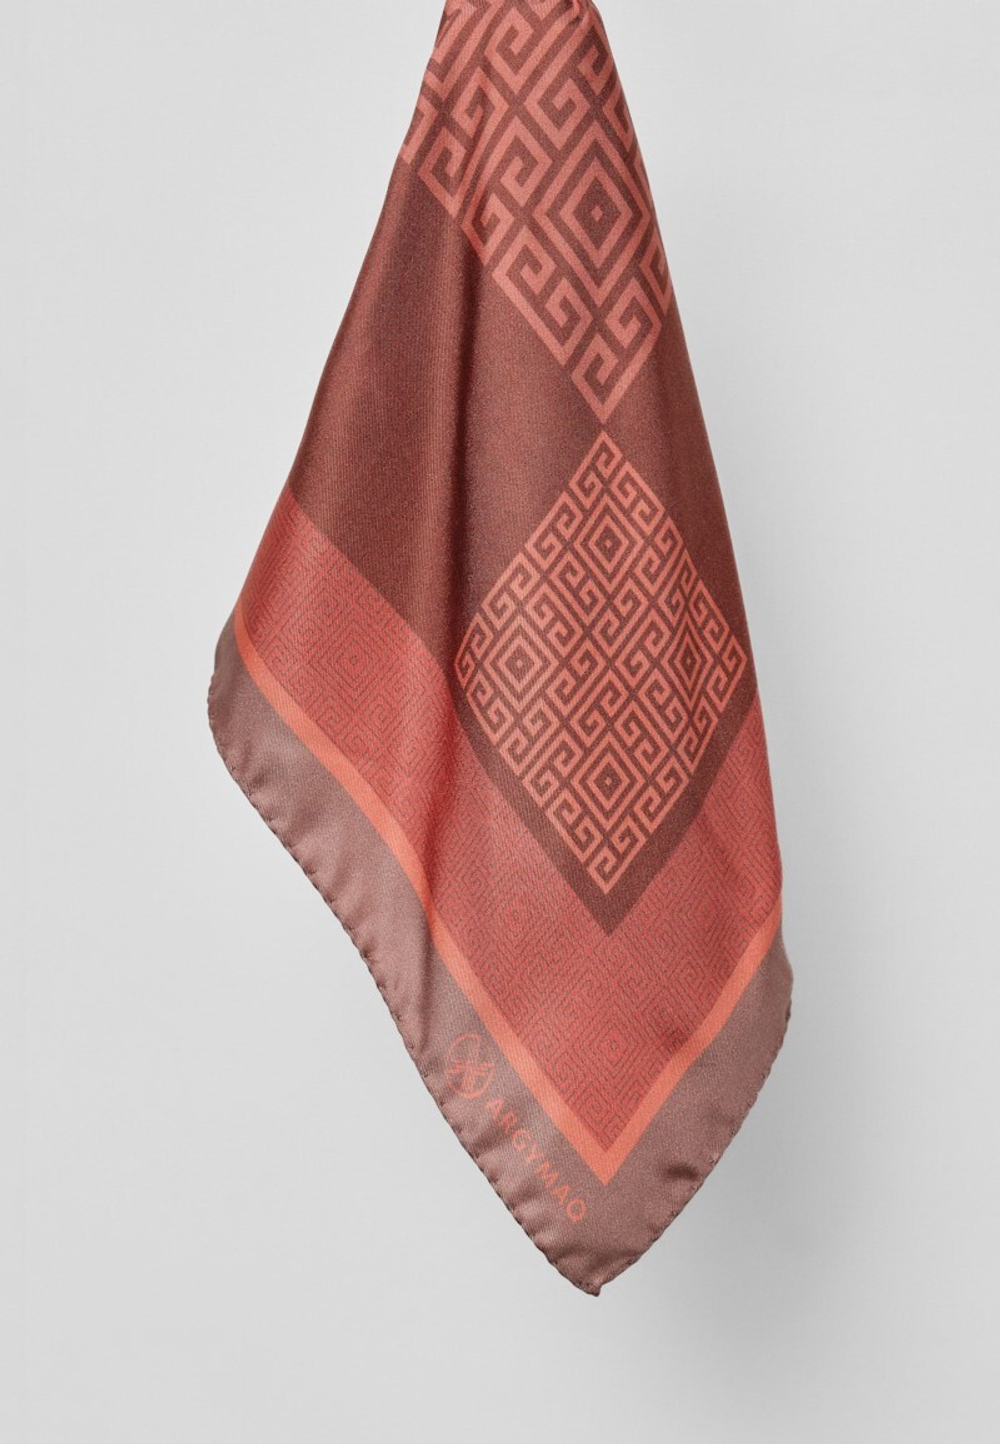 Шелковый платок "Орнамент3" PINK/BROWN 45x45